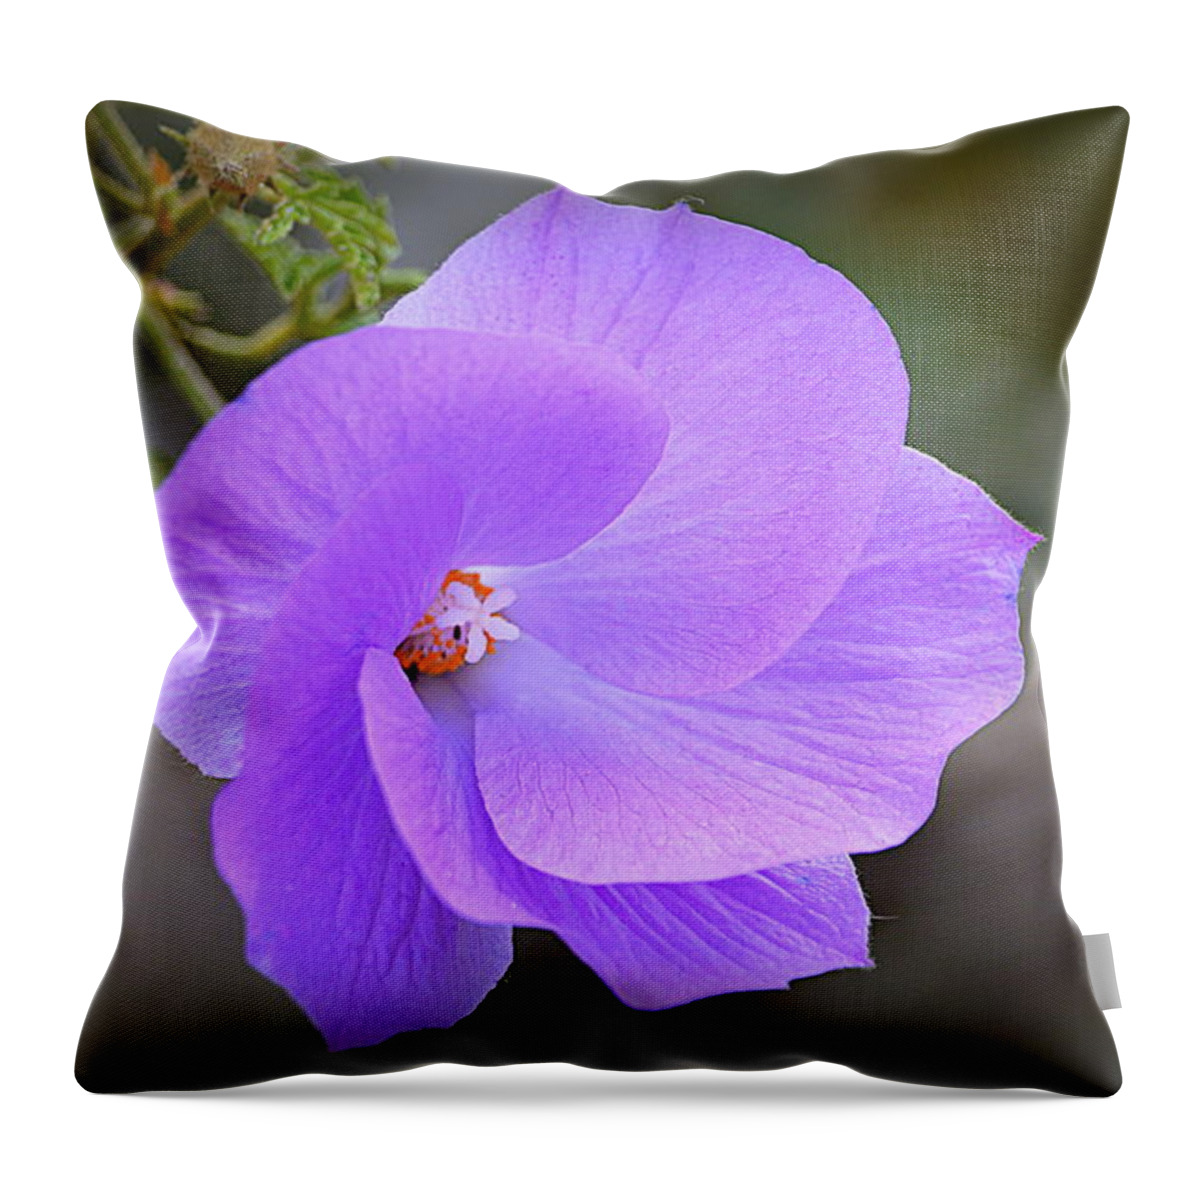 Flower Throw Pillow featuring the photograph Lavender Flower by AJ Schibig